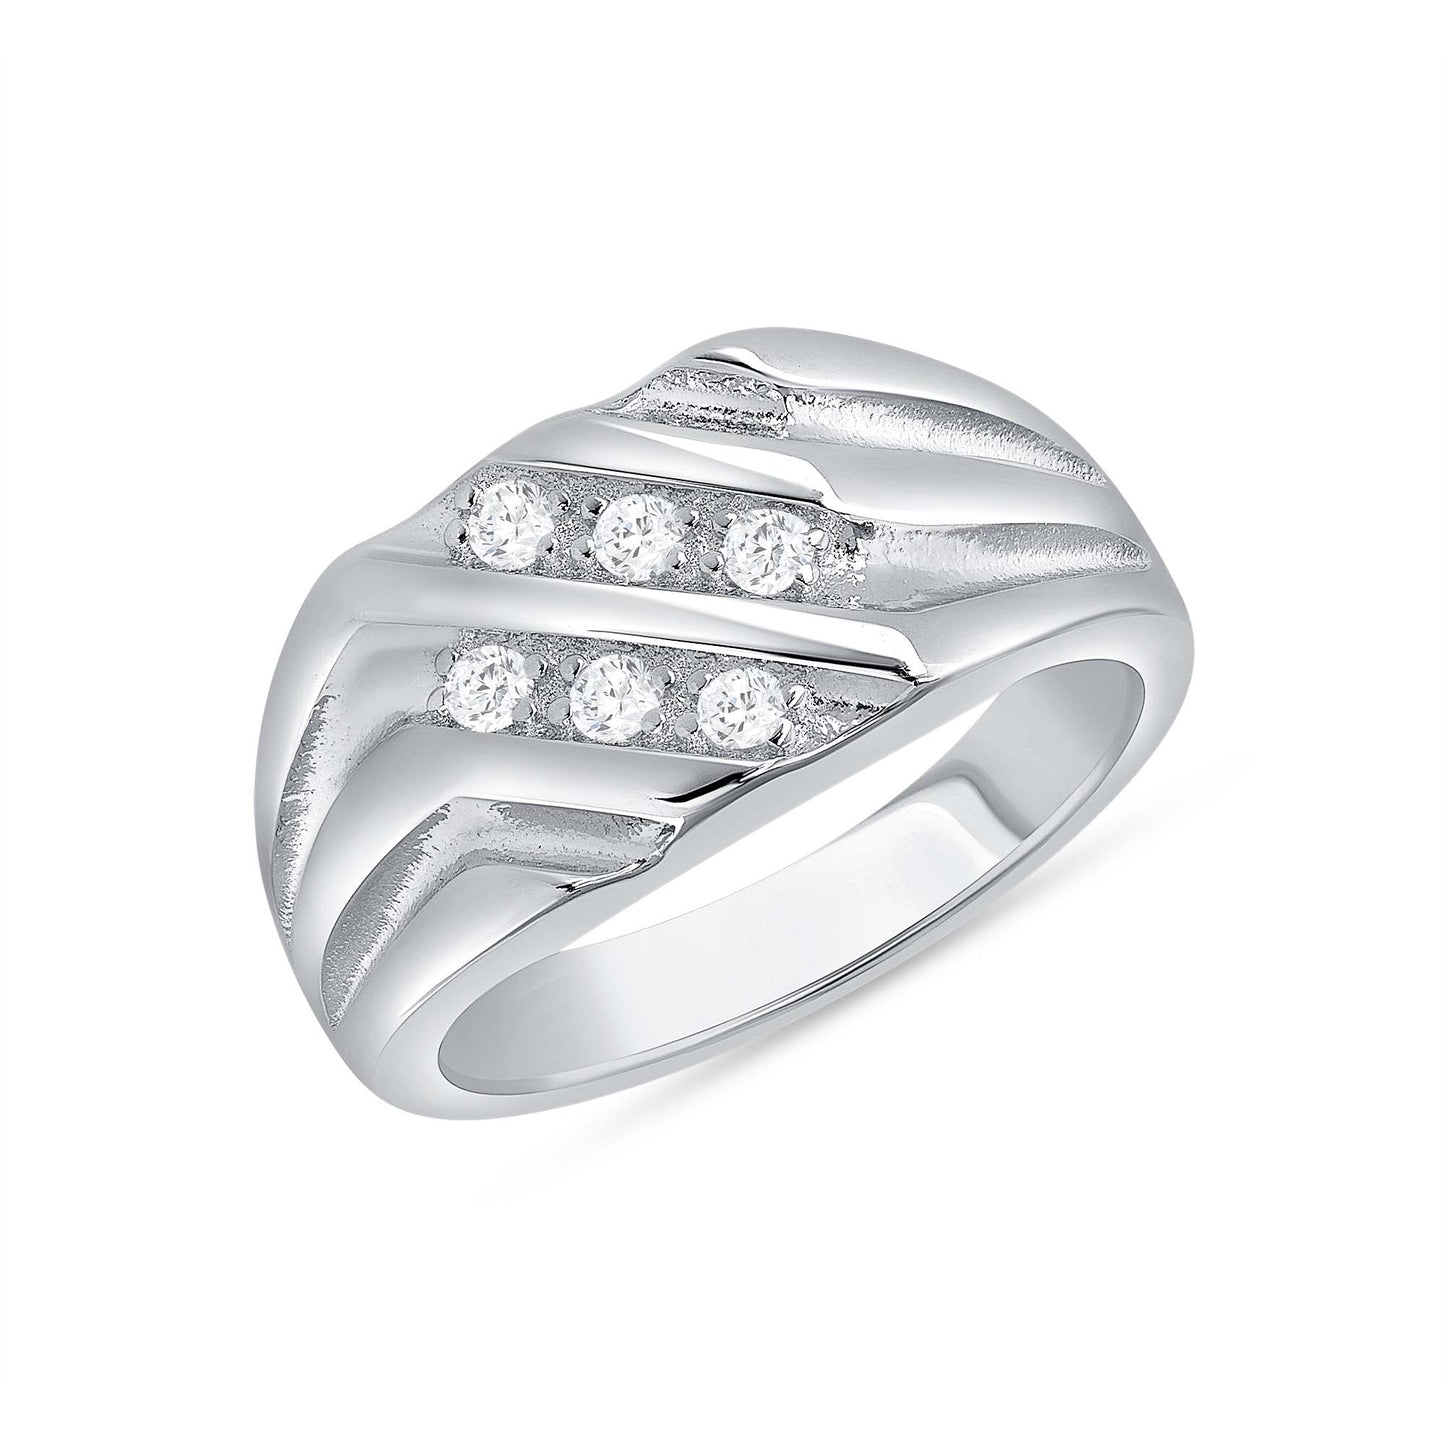 Silver 925 Cubic Zirconia Men's Ring. KOS3909